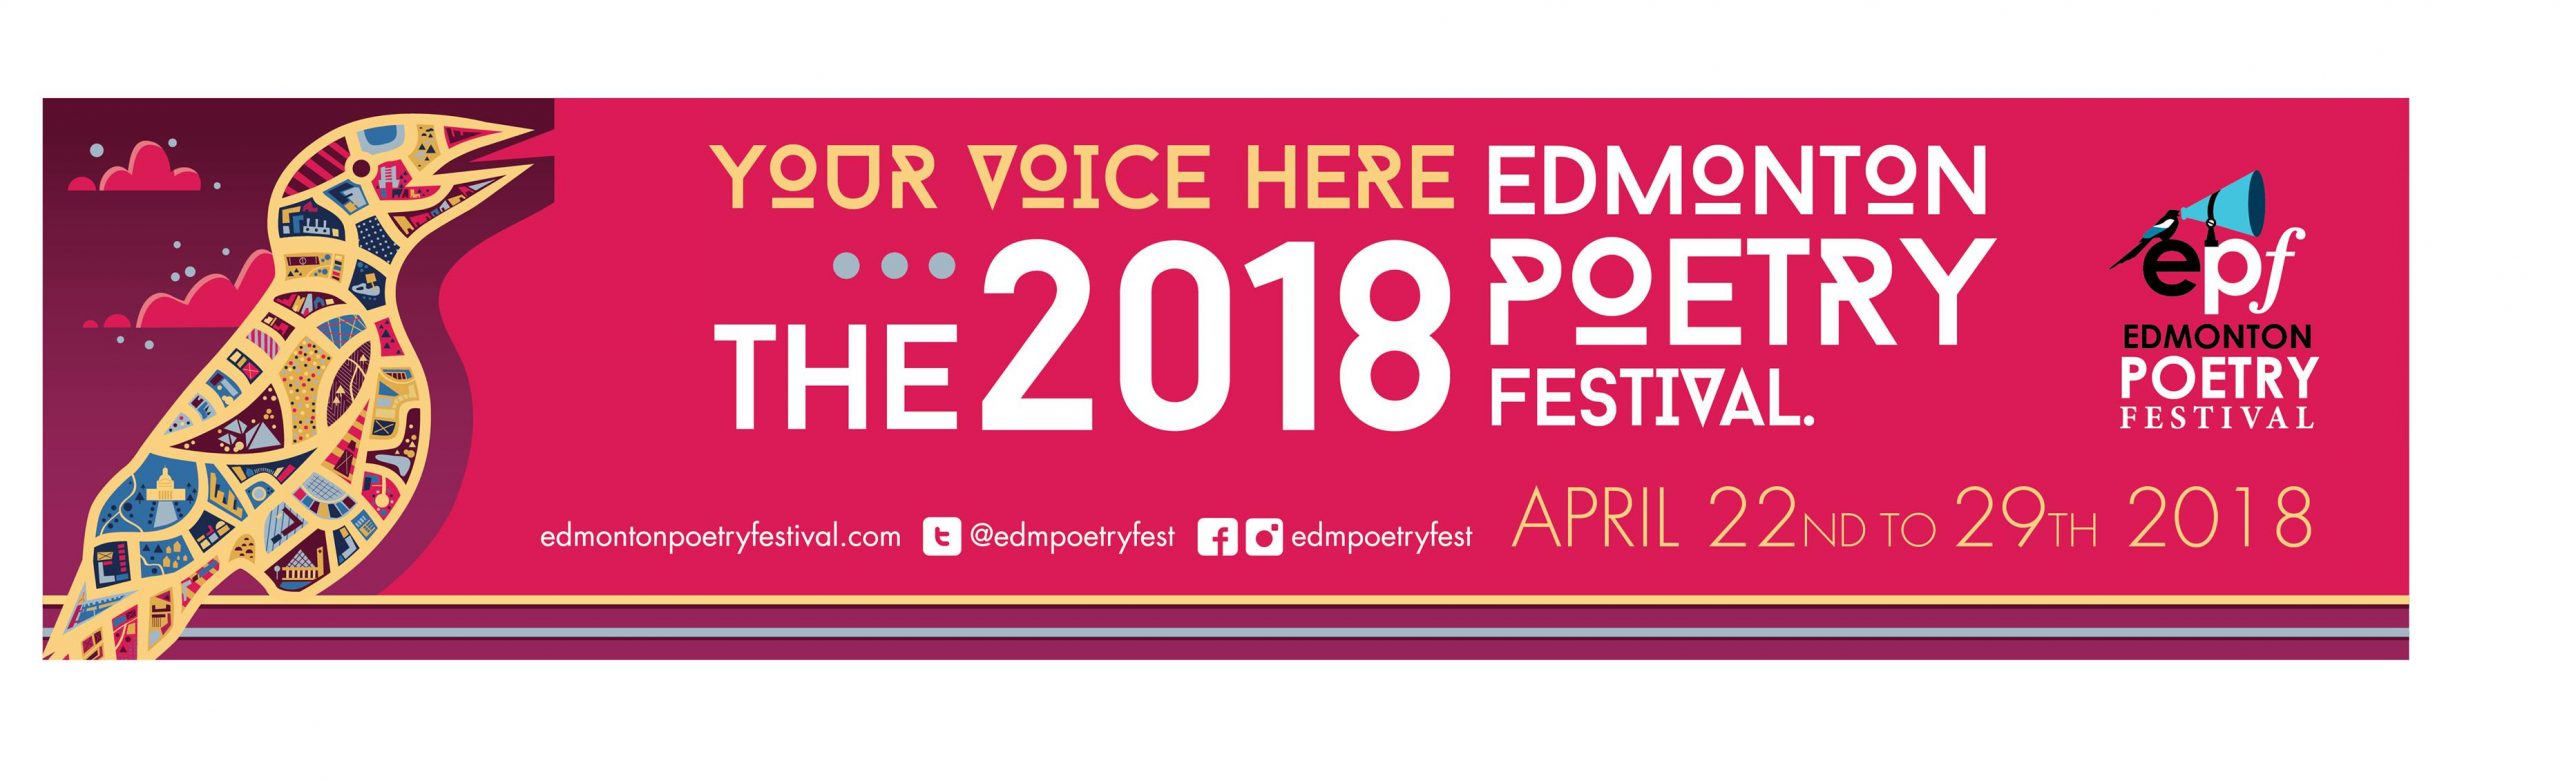 2018 Edmonton Poetry Festival - Your Voice Here